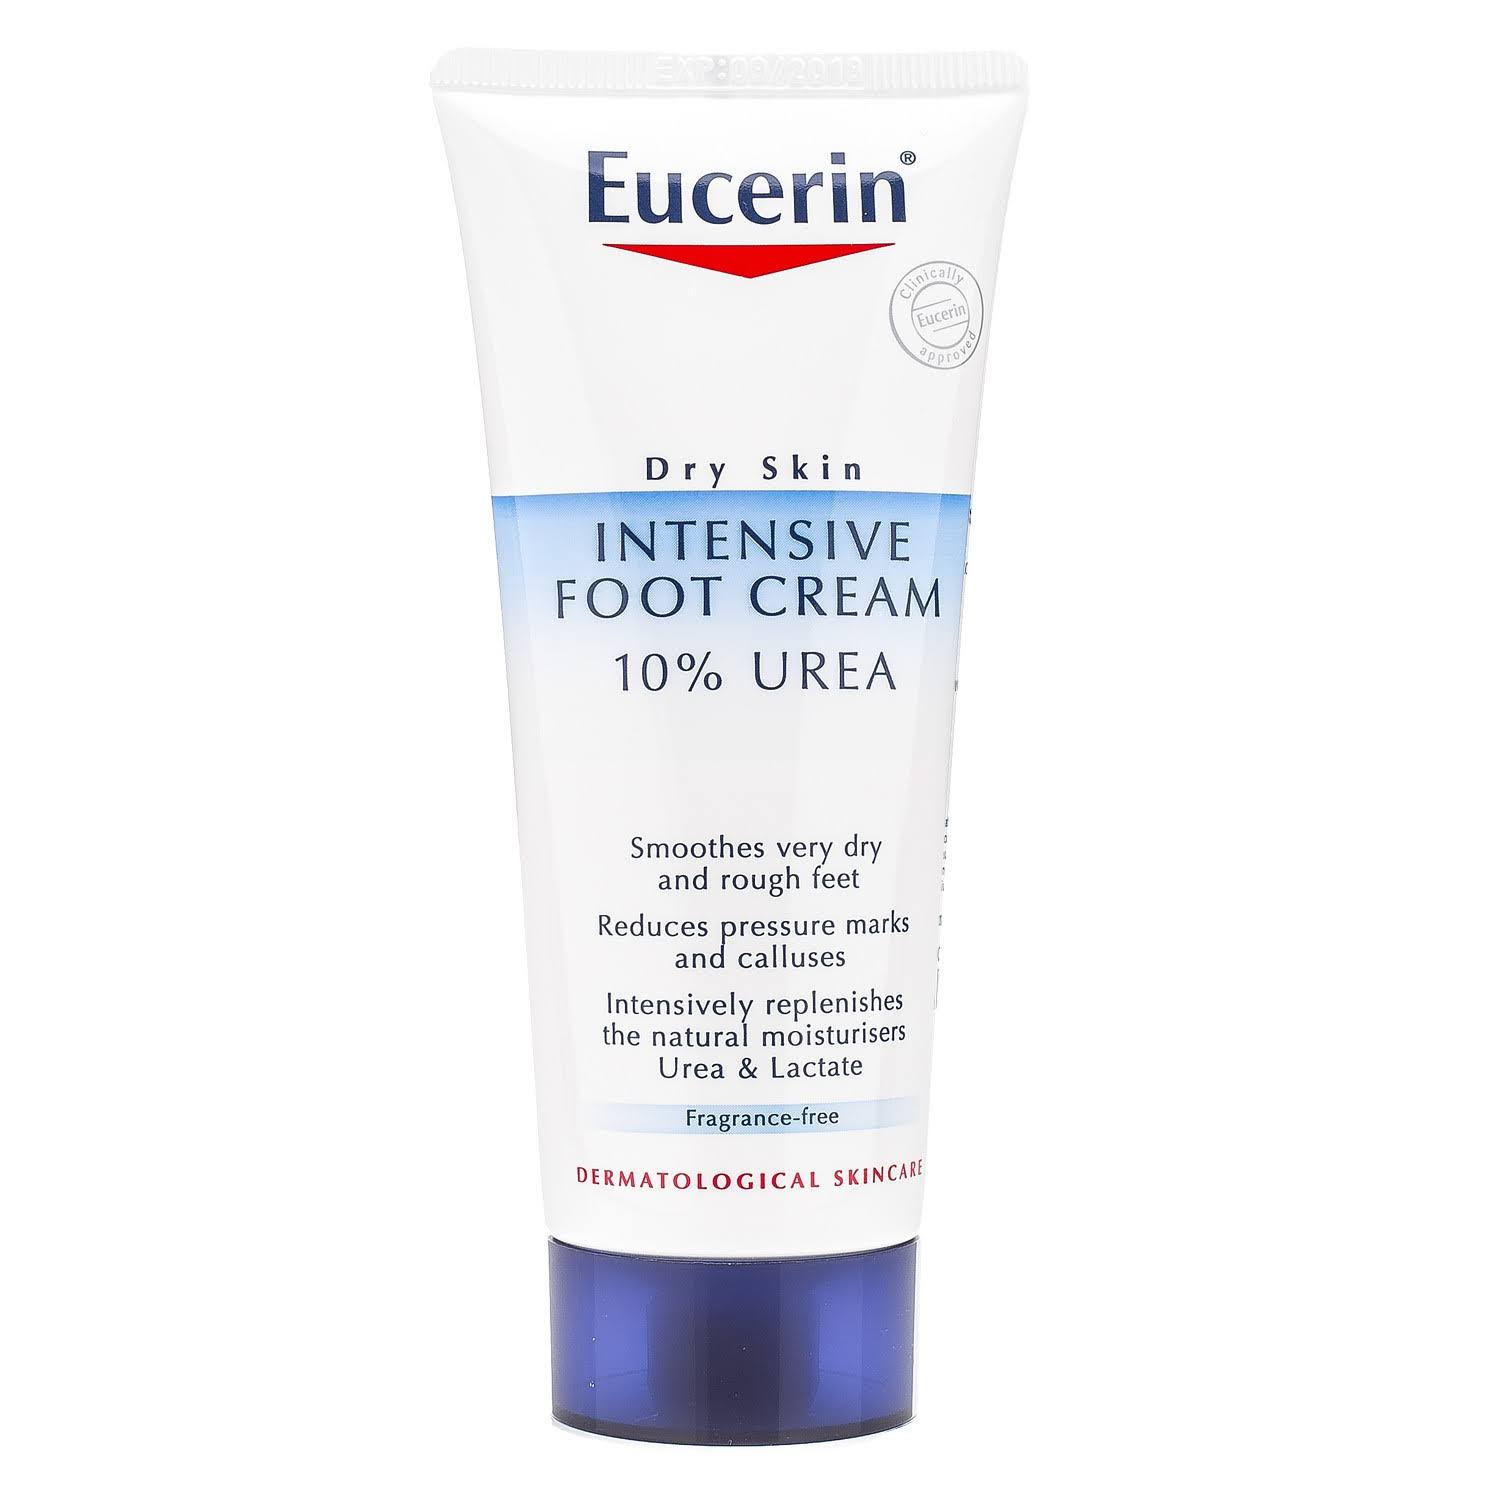 Eucerin Dry Skin Intensive Foot Cream 10% Urea 100ml